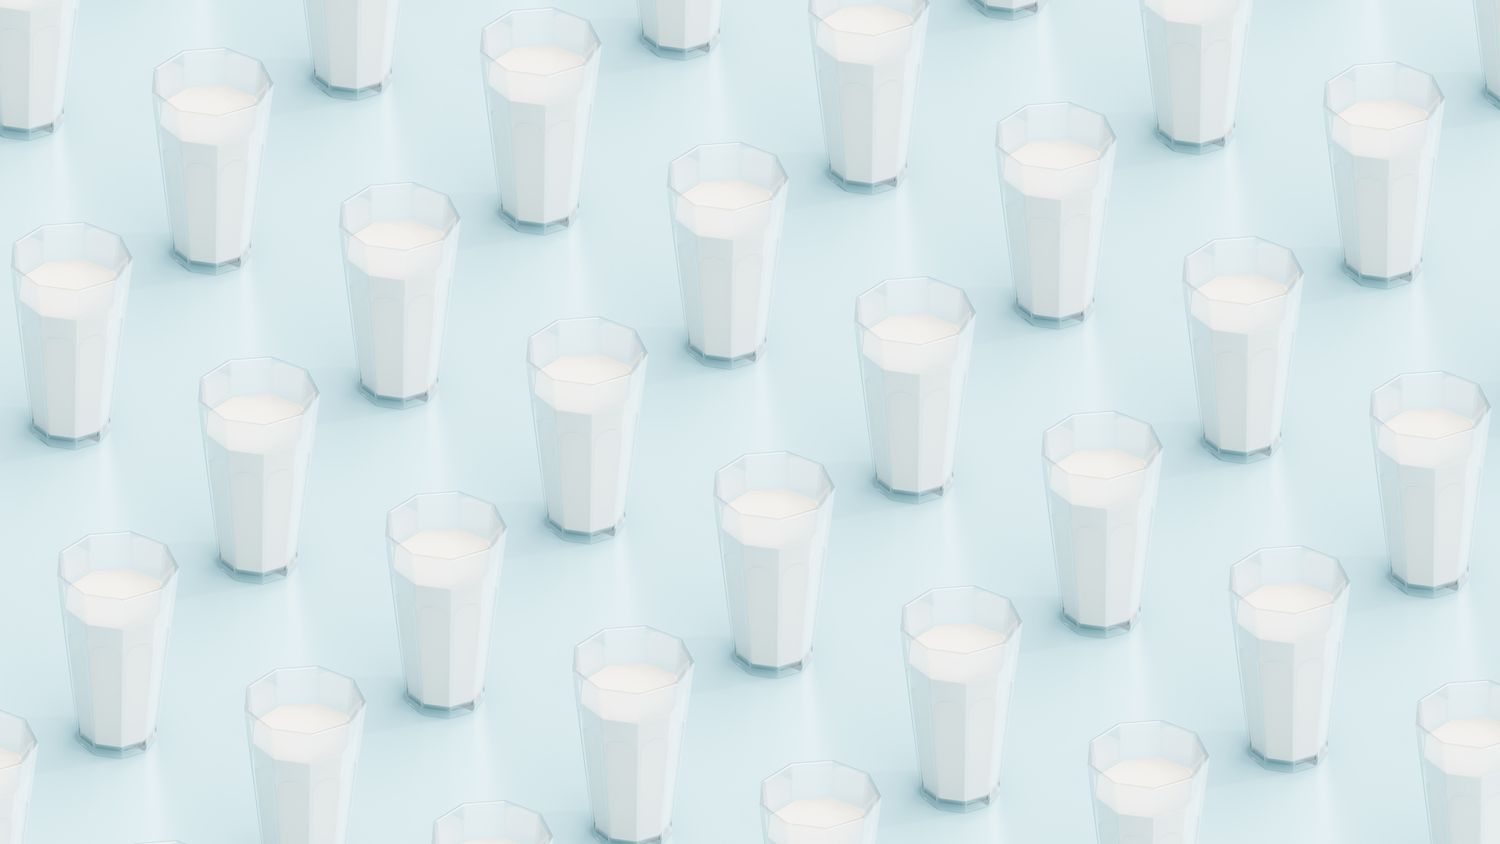 glasses of milk